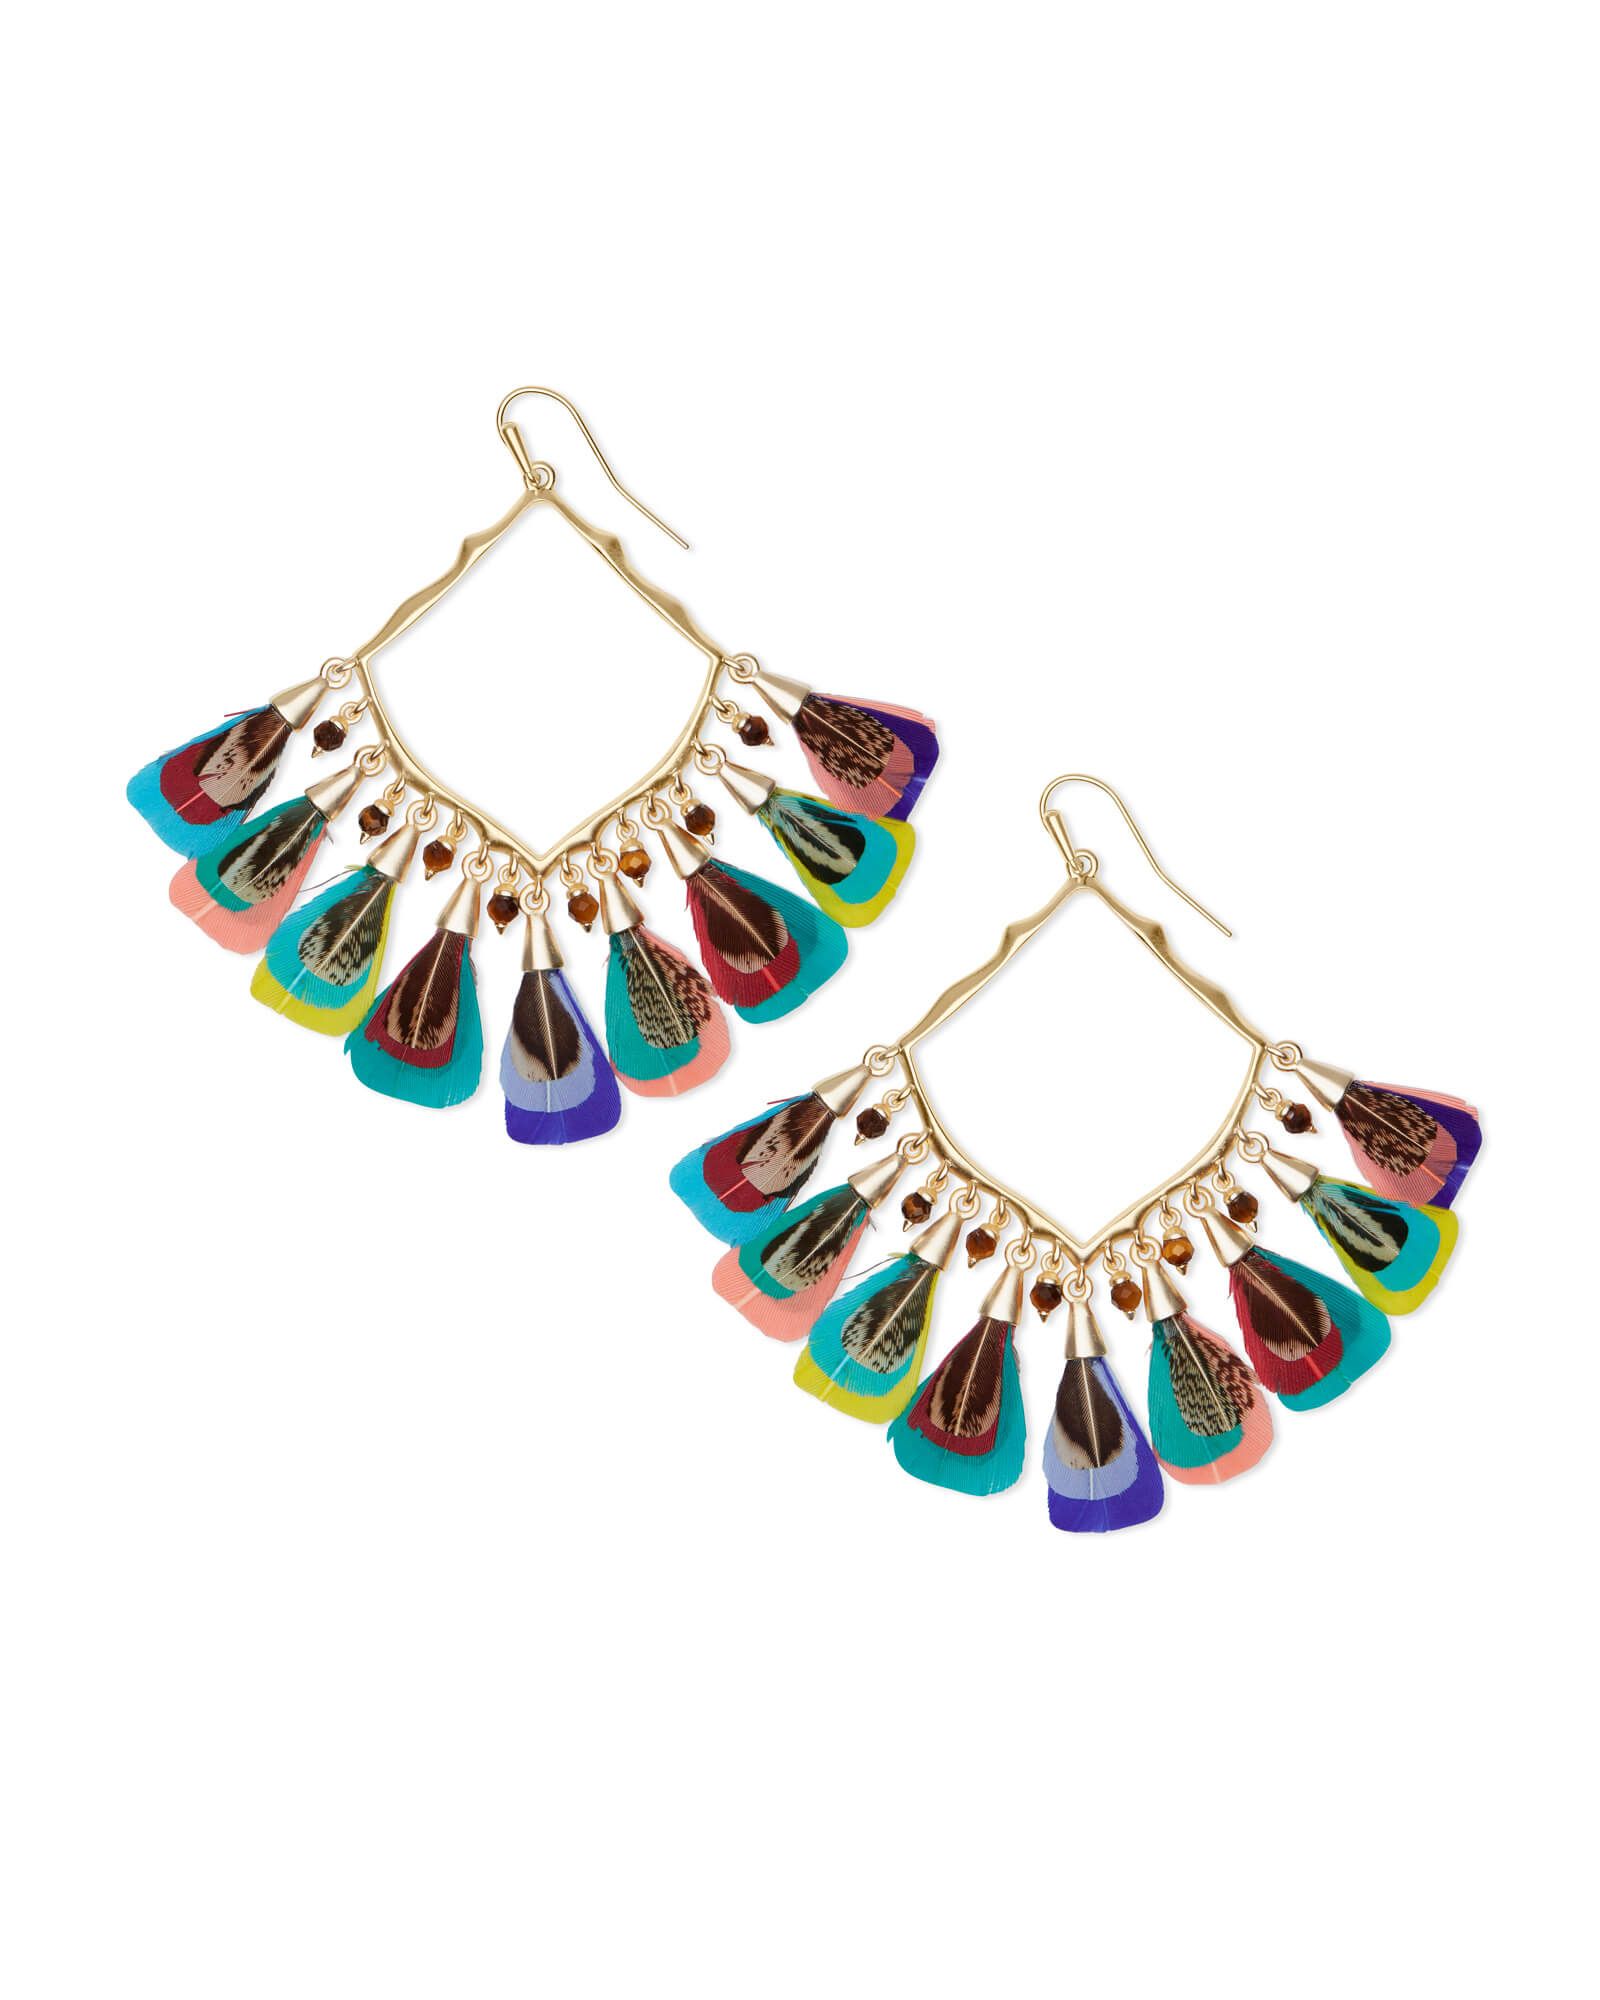 Raven Gold Drop Earrings in Multi Color Feather Bead Mix | Kendra Scott